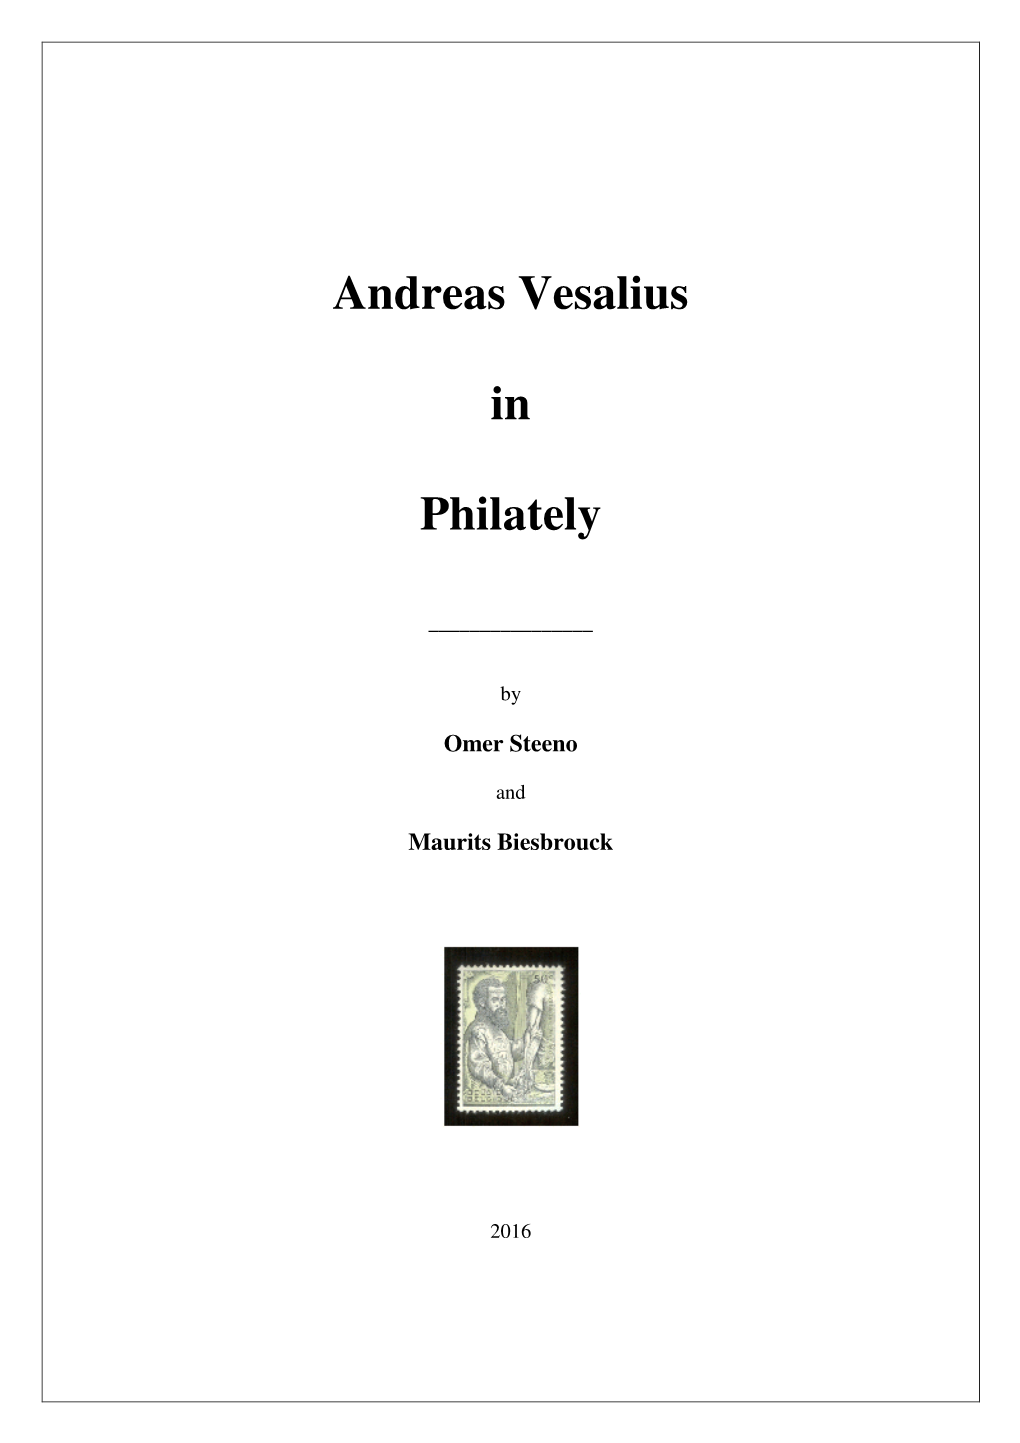 Andreas Vesalius in Philately